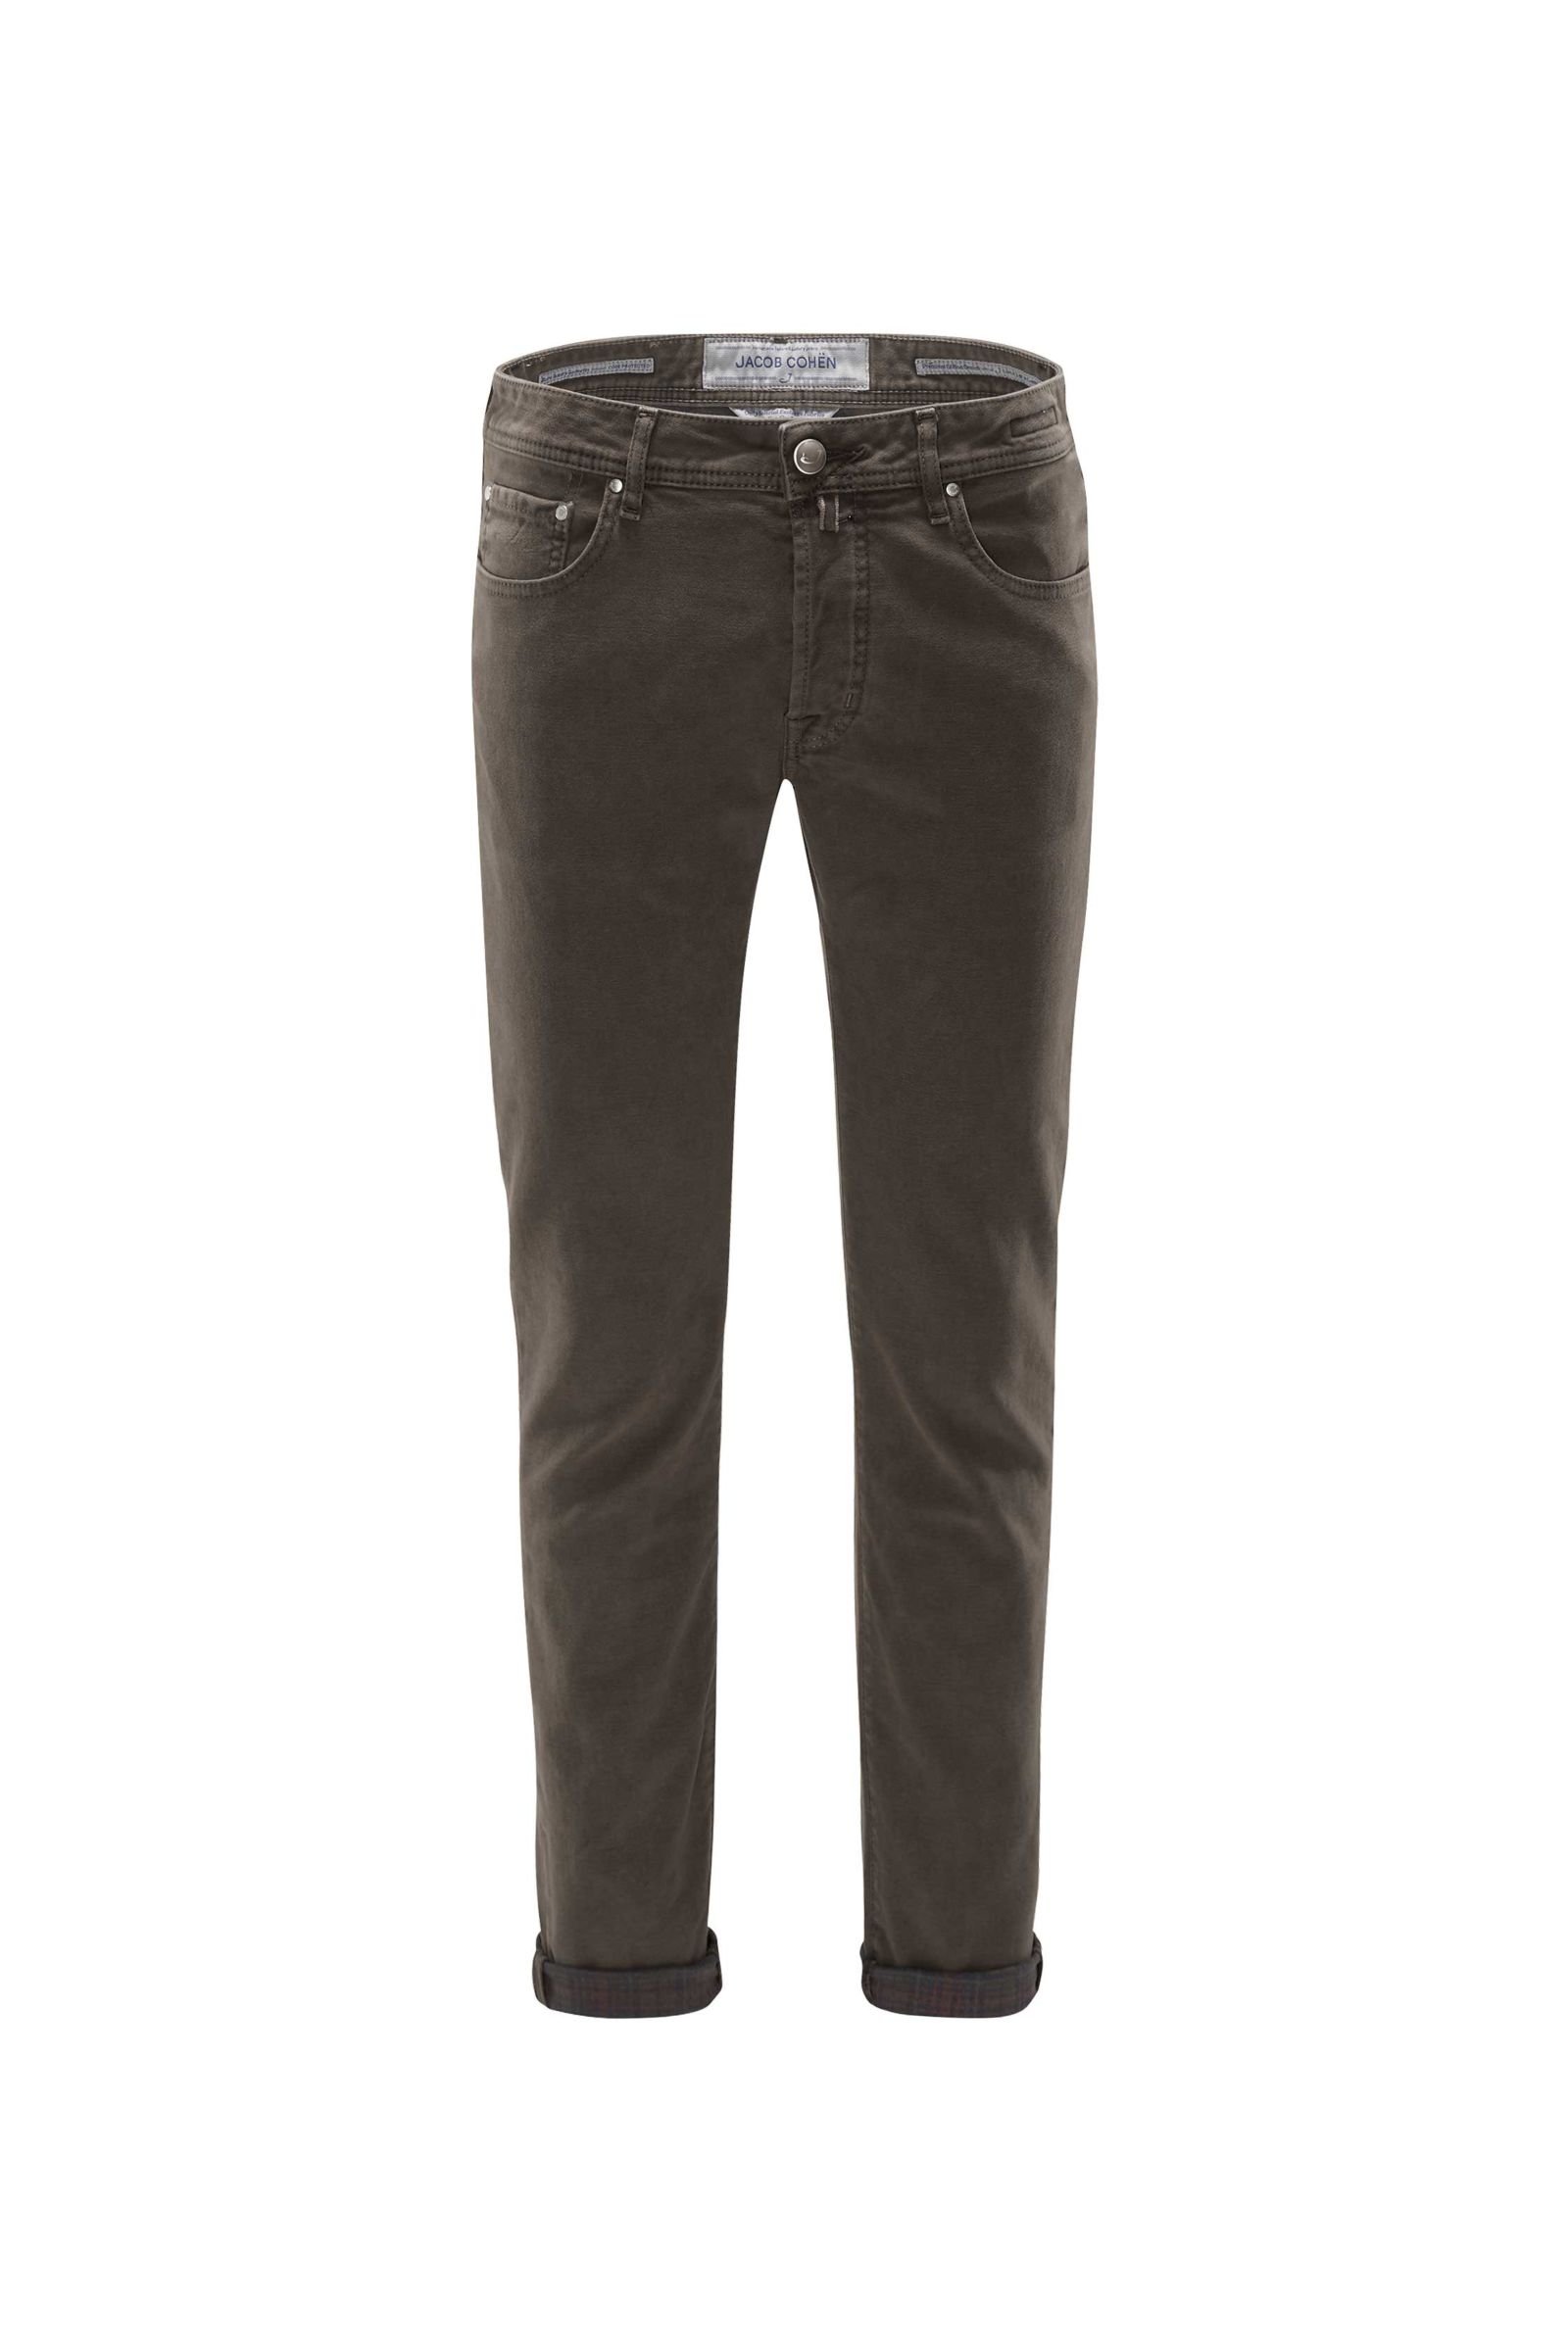 Fustian trousers 'J688 Comfort Slim Fit' khaki